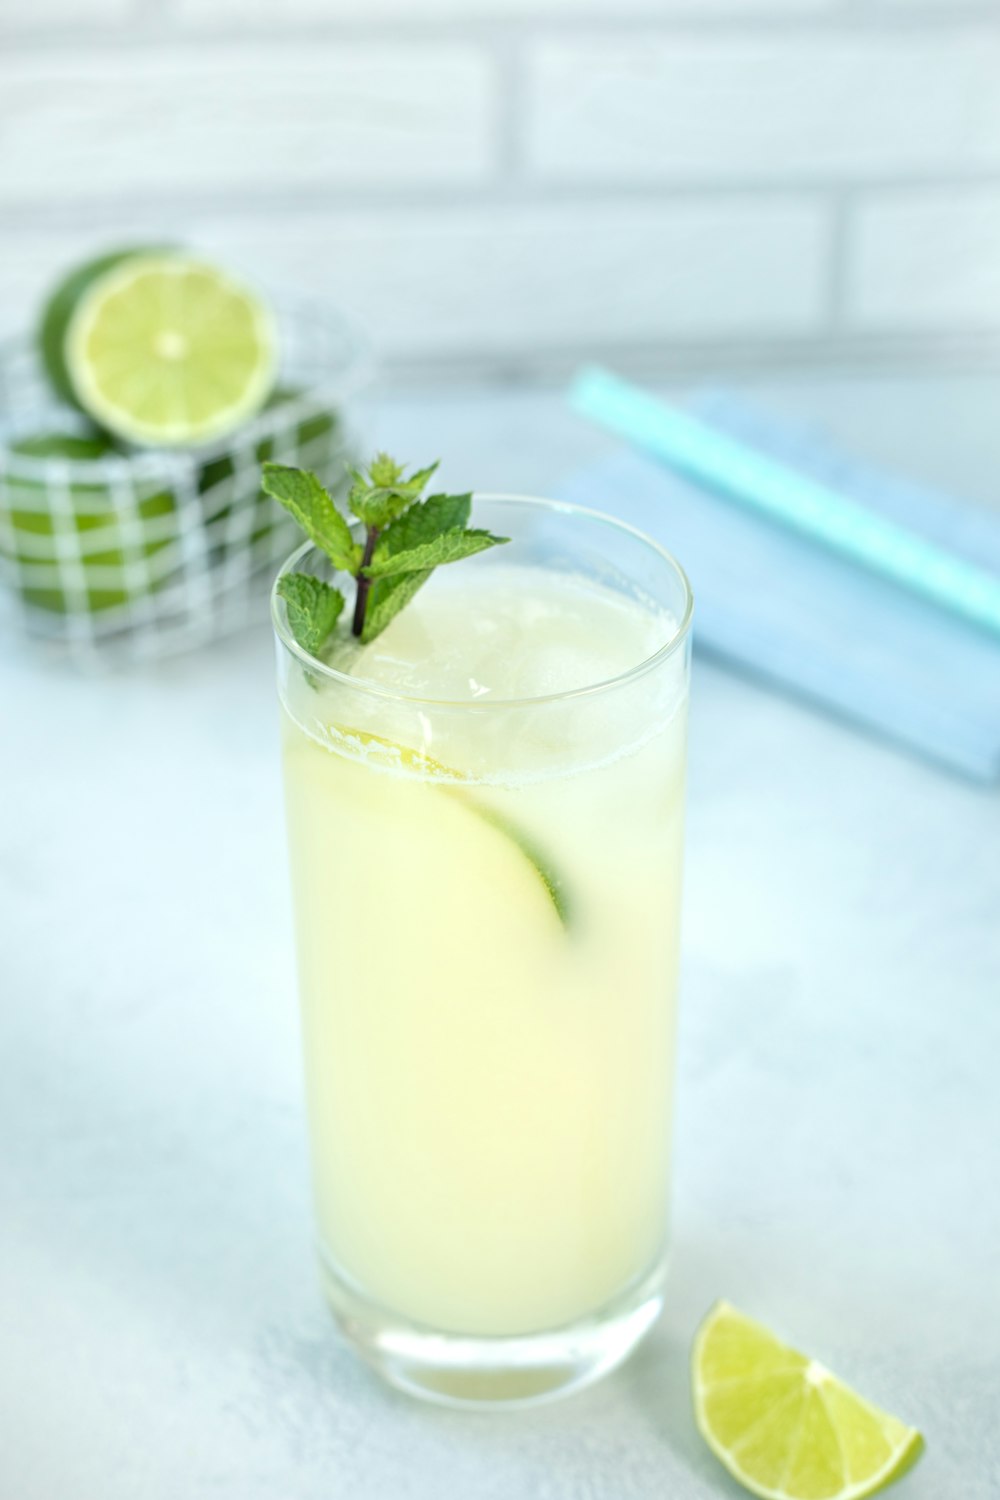 a glass of lemonade with a lime wedge and a lemon slice